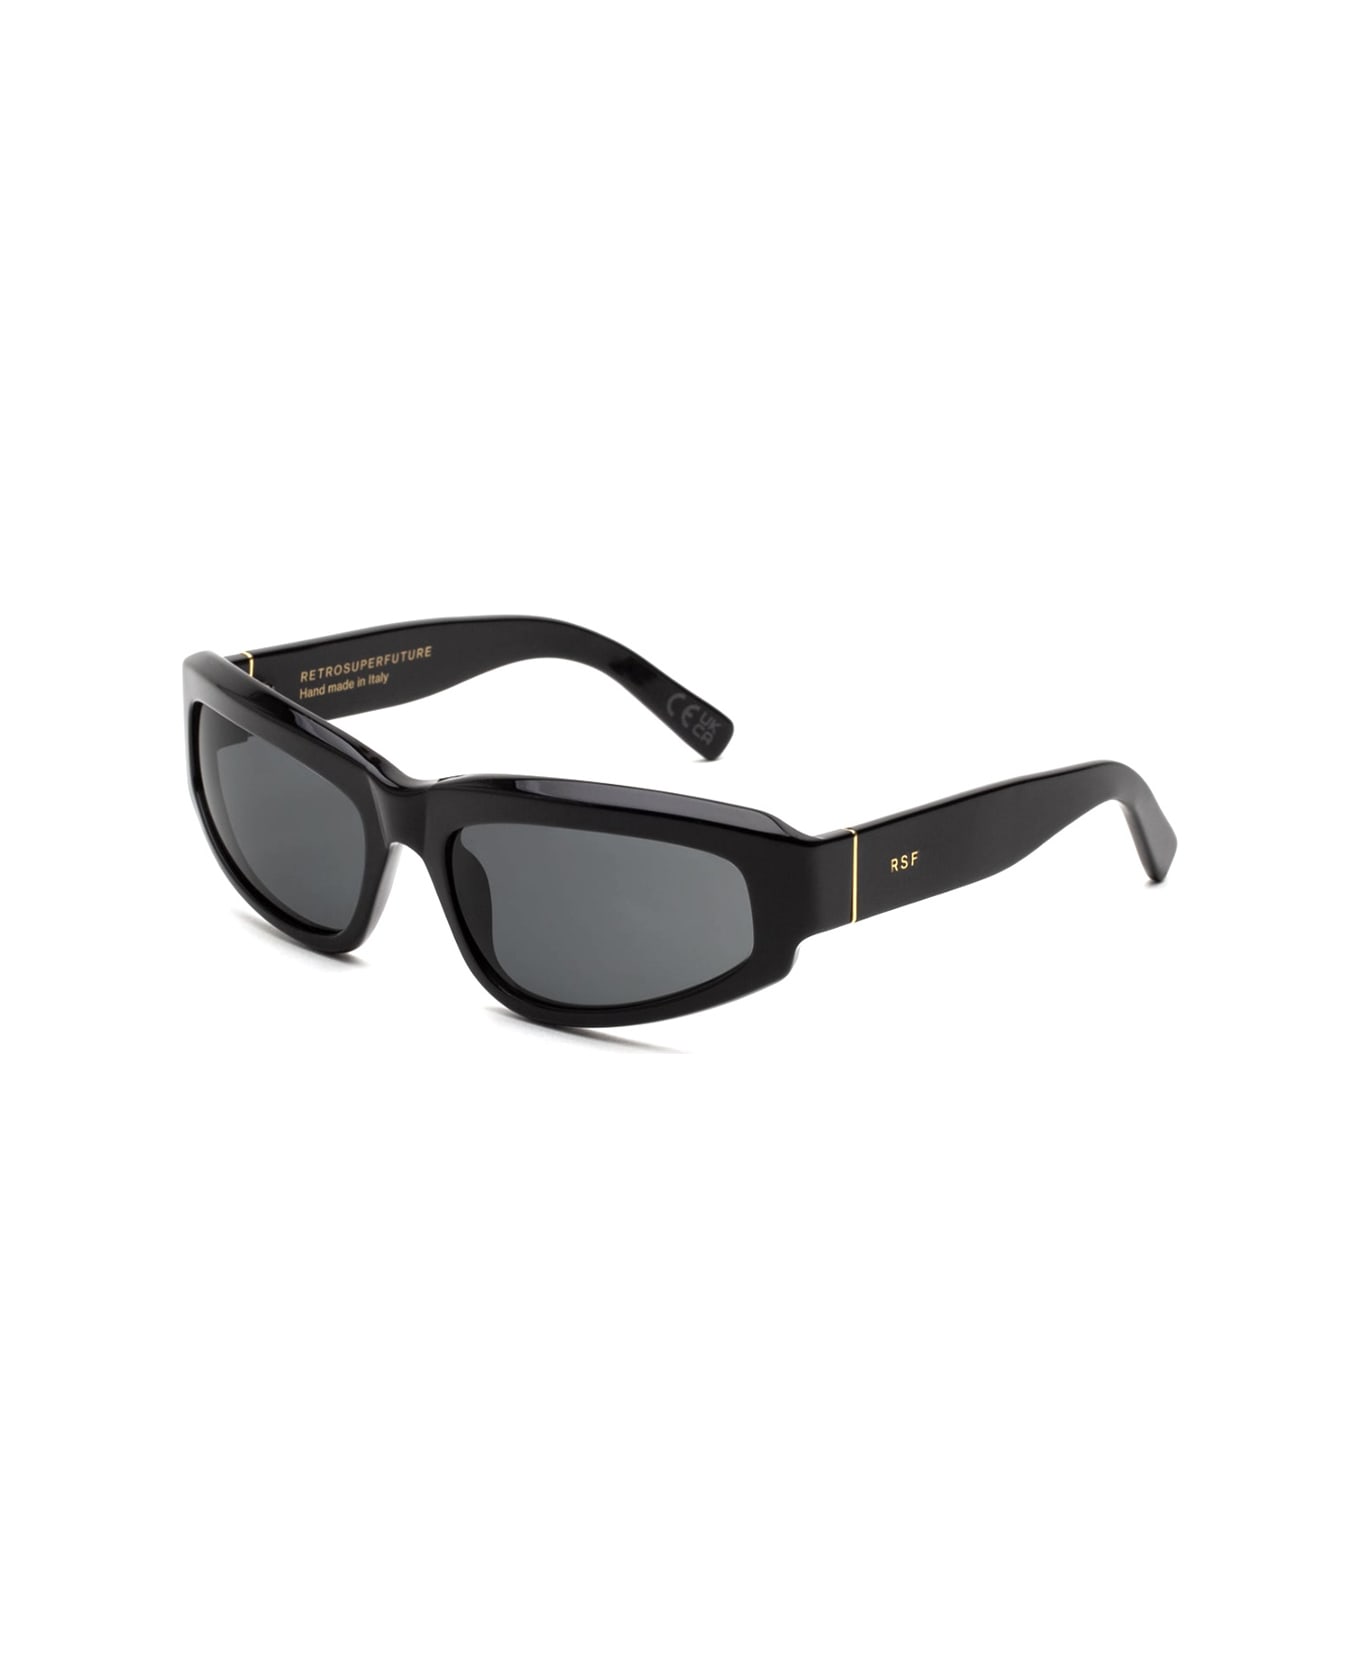 RETROSUPERFUTURE Motore Black 5ab Sunglasses - Nero サングラス